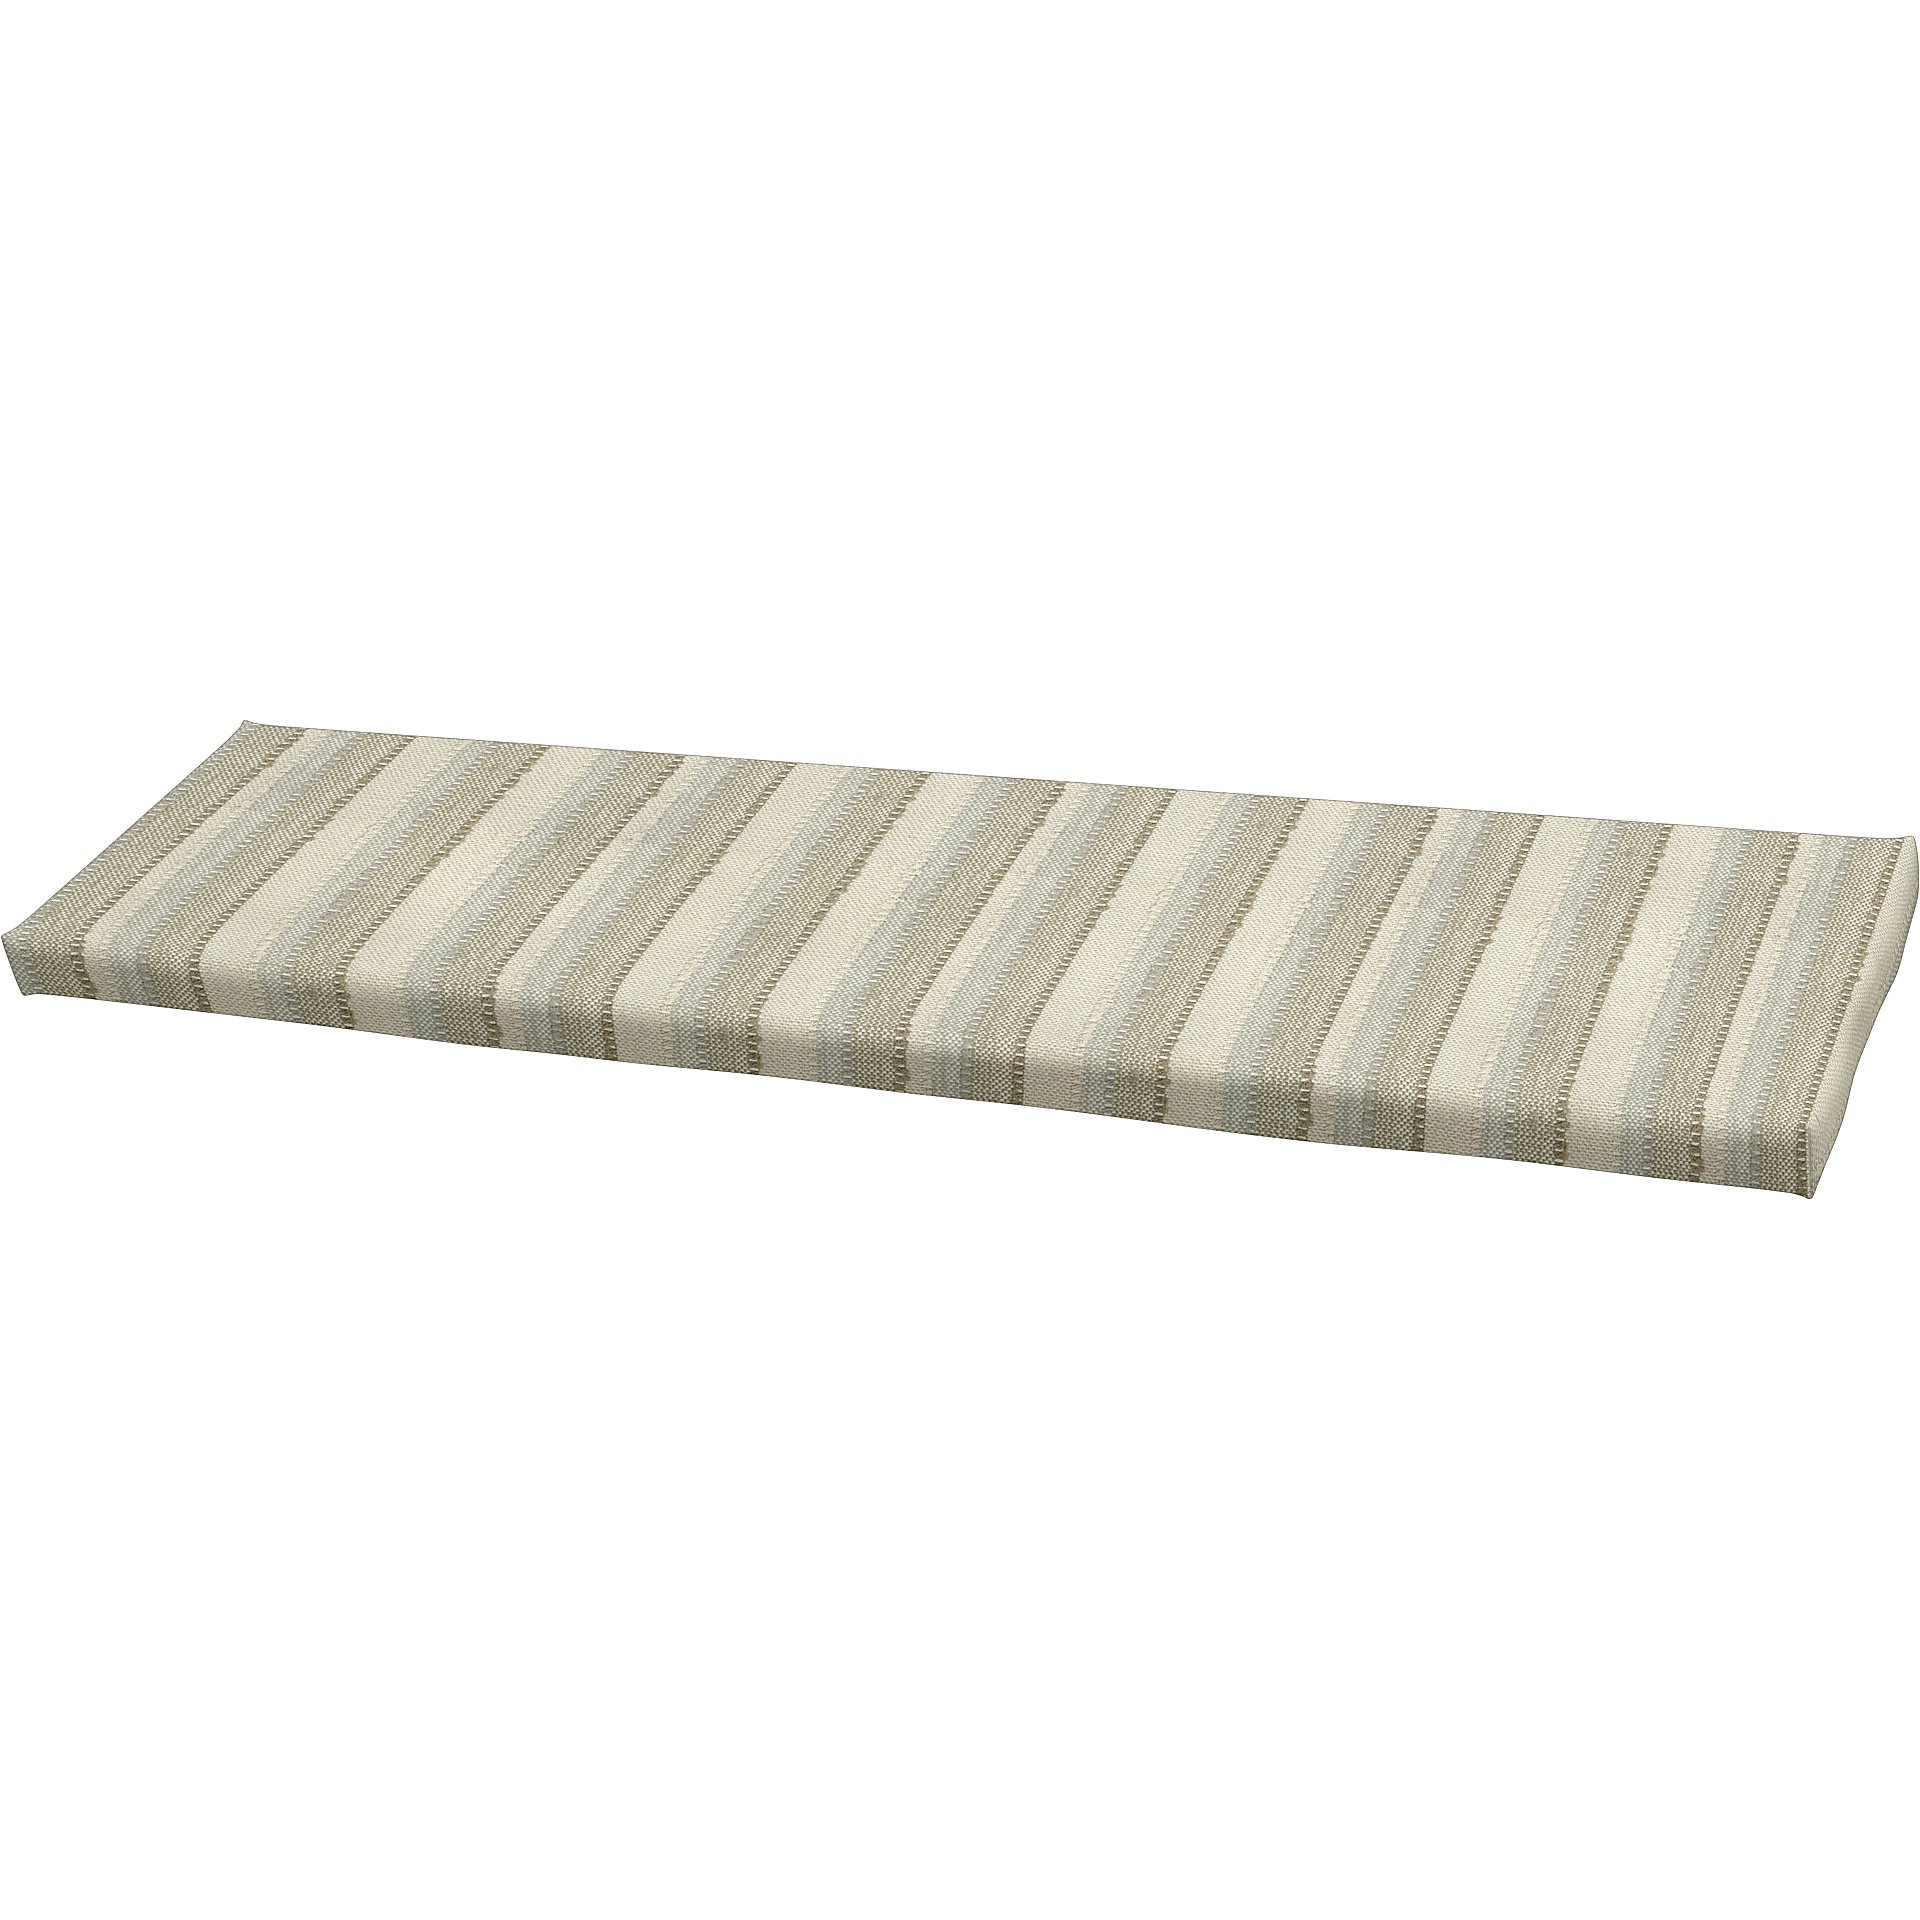 IKEA - Universal bench cushion cover 120x35x3,5 cm, Beach Beige, Outdoor - Bemz